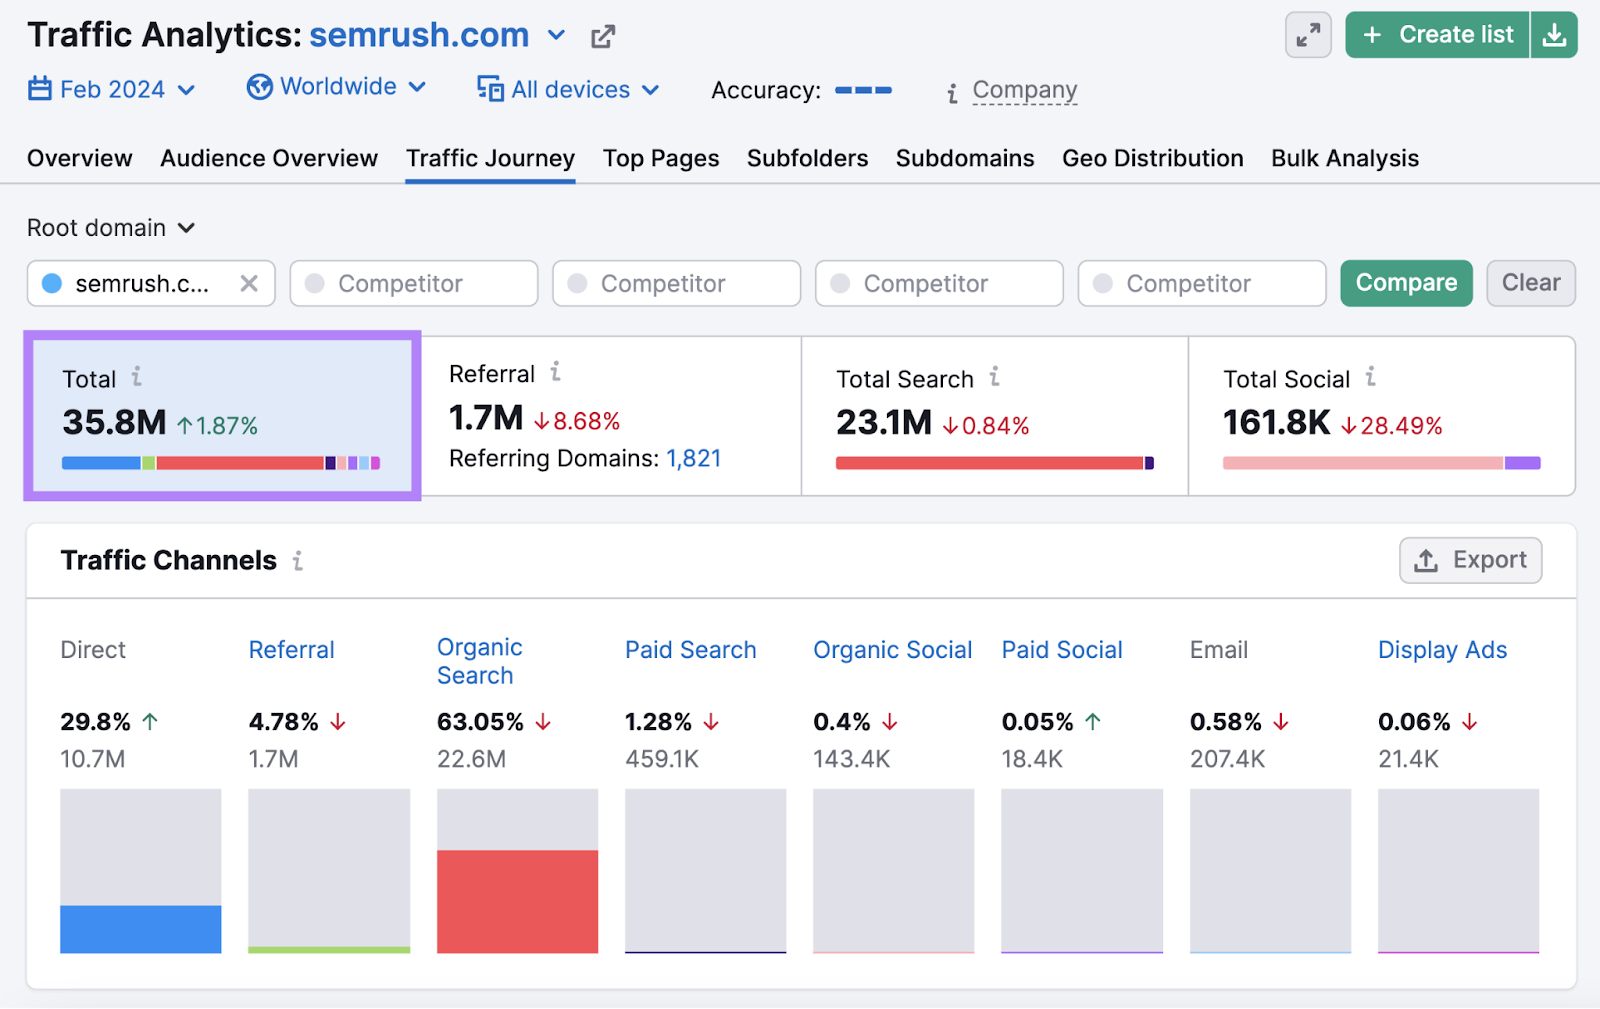 Traffic Analytics tool showing total traffic of 38.5M for semrush.com